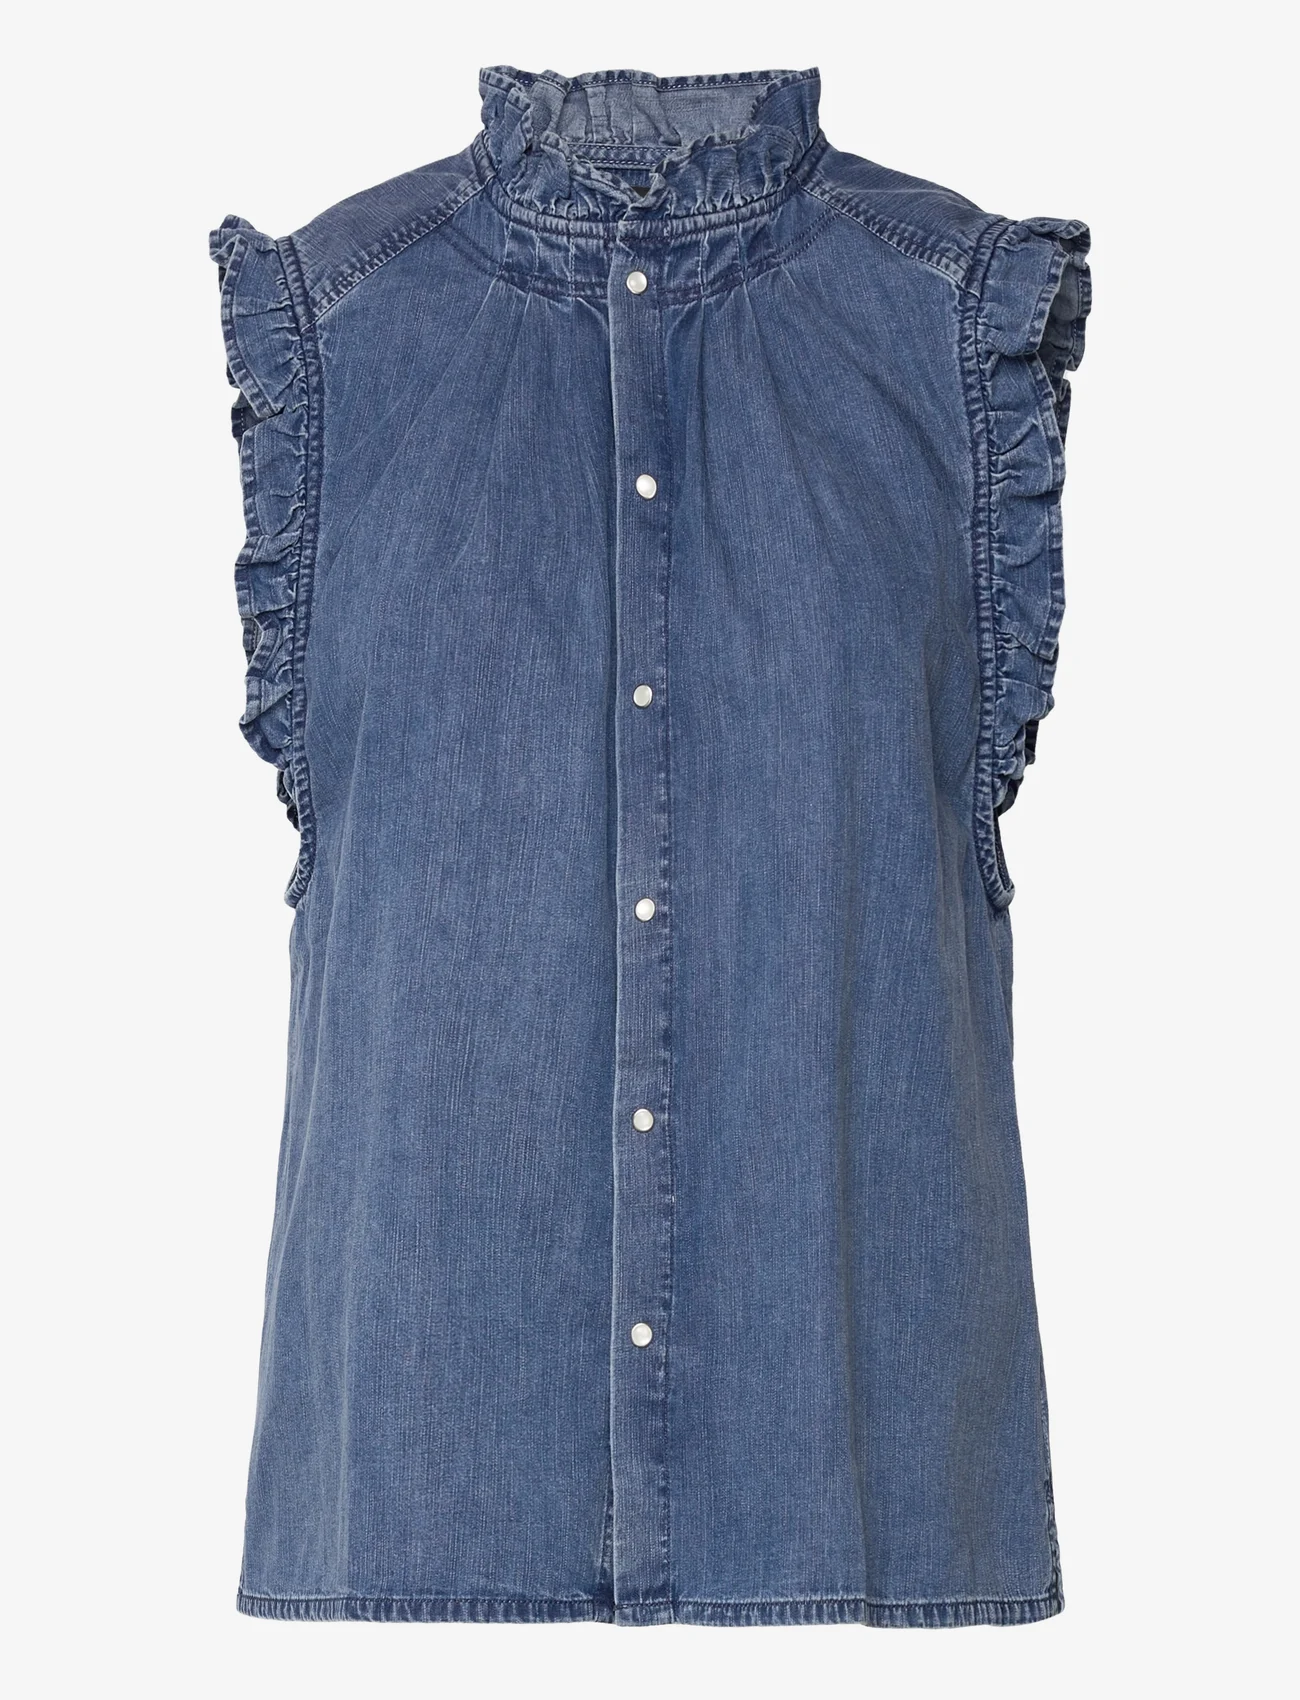 Replay - Shirt REGULAR - sleeveless blouses - blue - 0